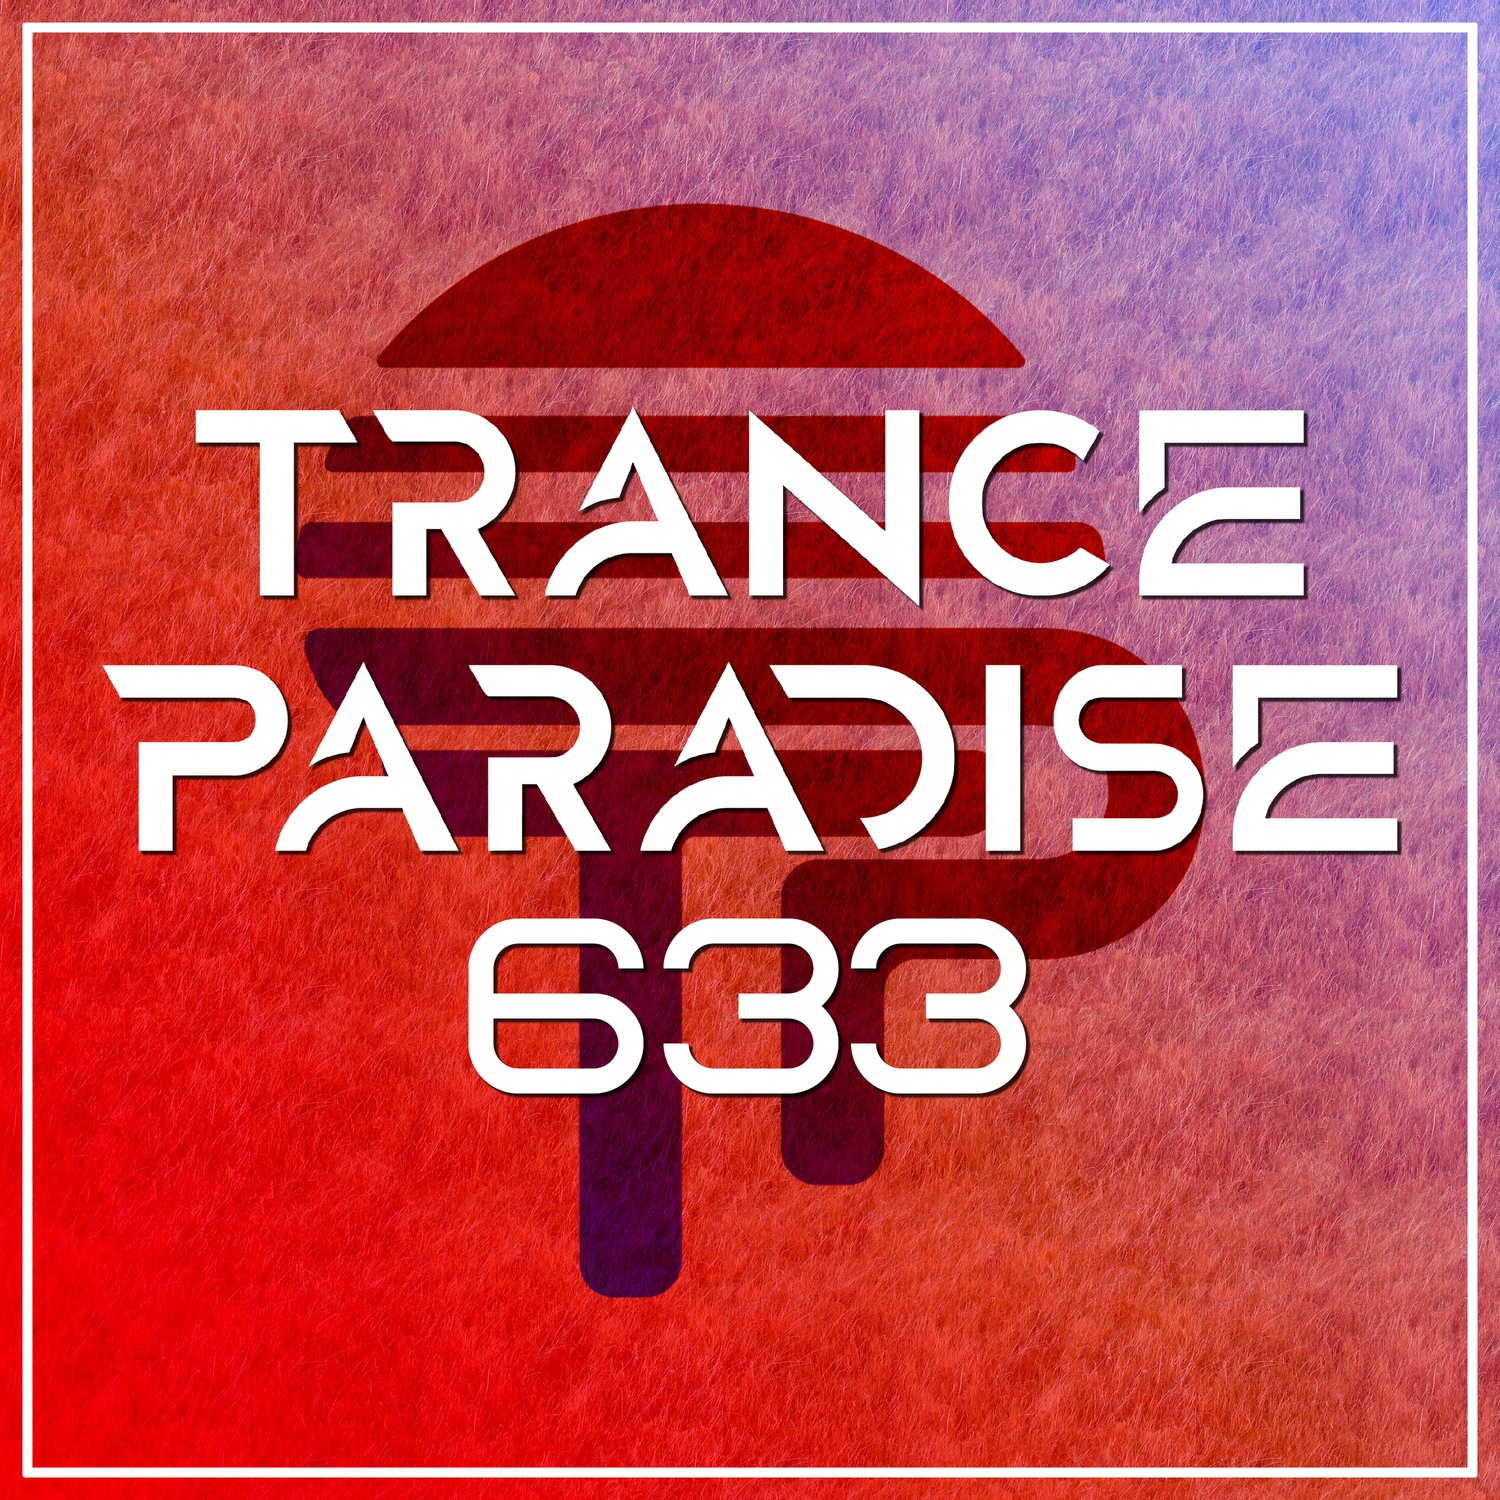 Trance Paradise 633